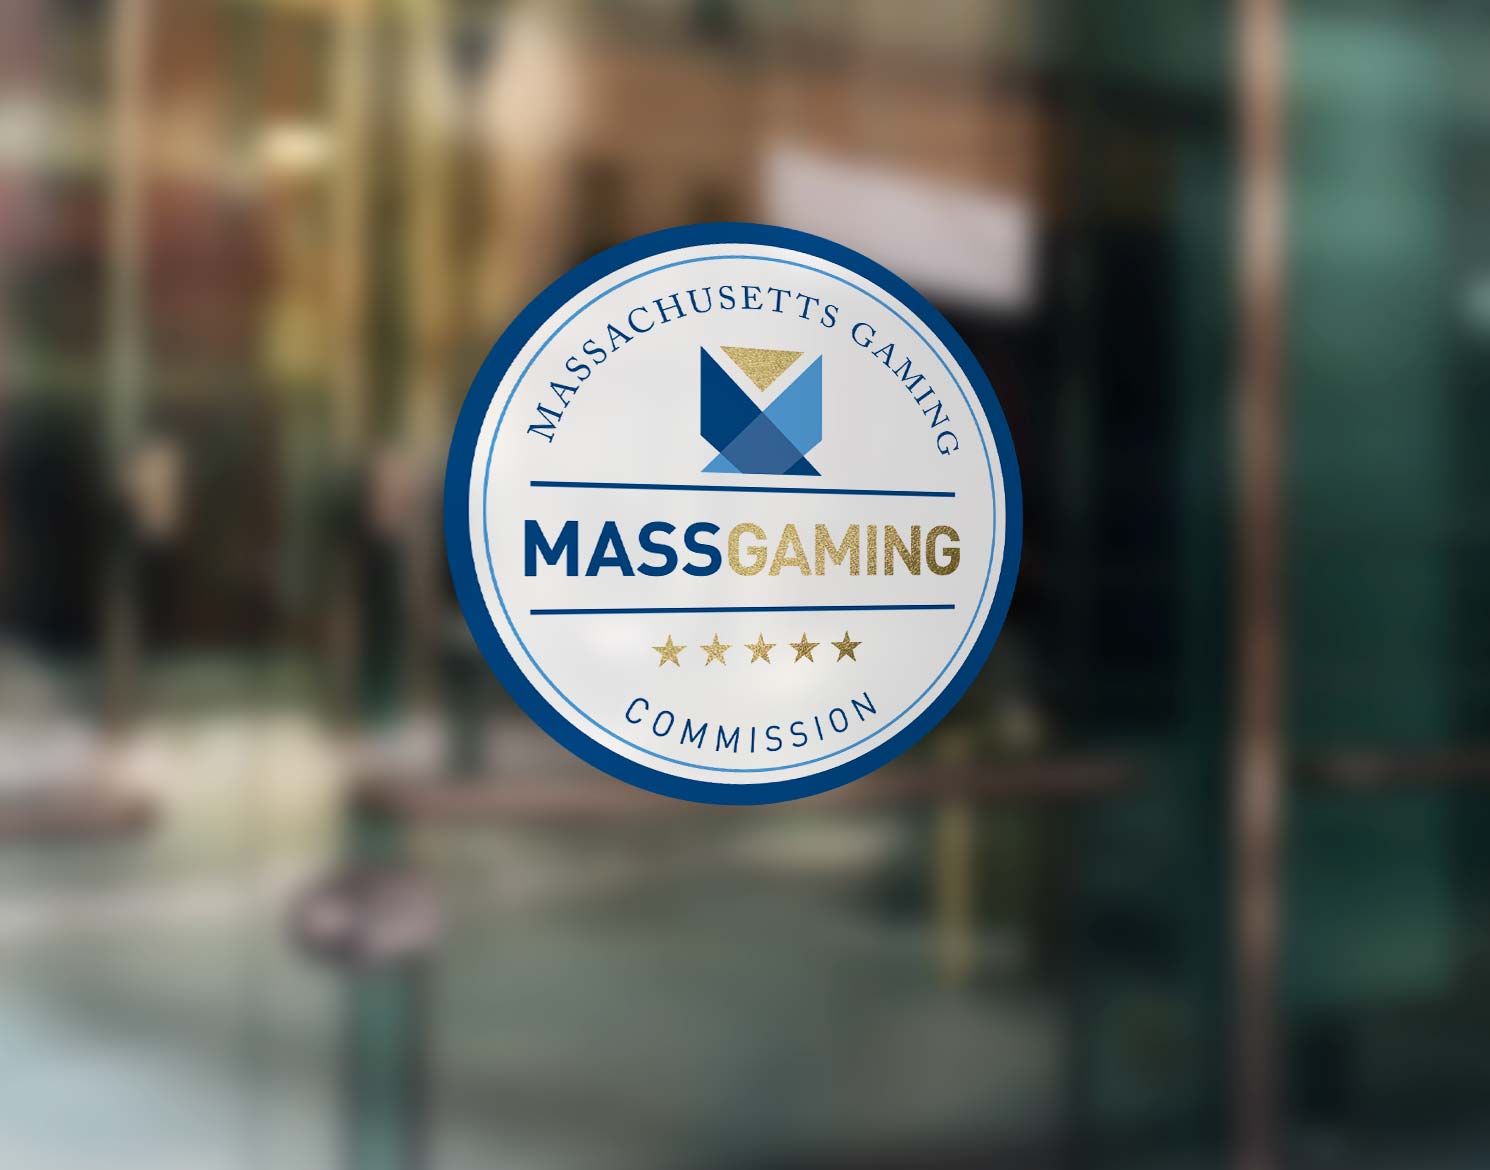 Massachusetts Gaming Commission logo on glass window